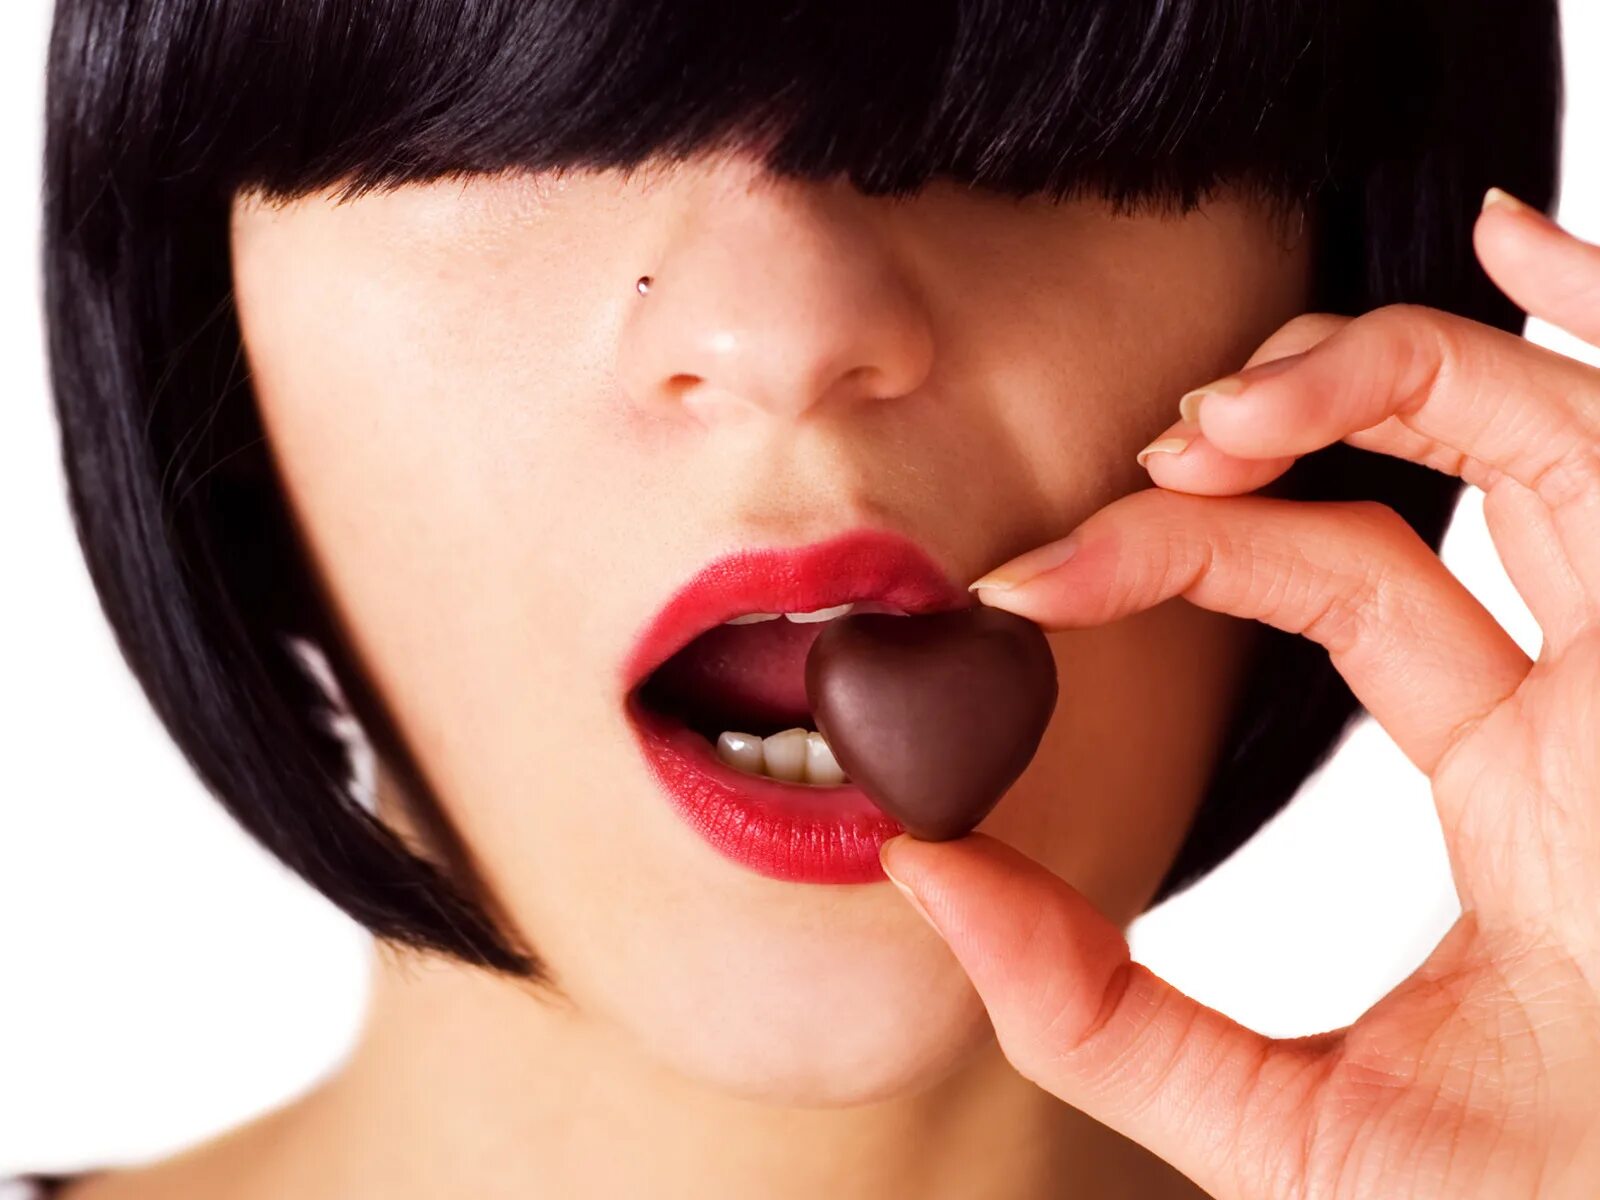 Девушка ест конфету. Девушка ест шоколадные конфеты. Женщина с конфетами. Шоколадные губы. Есть шоколад на ночь